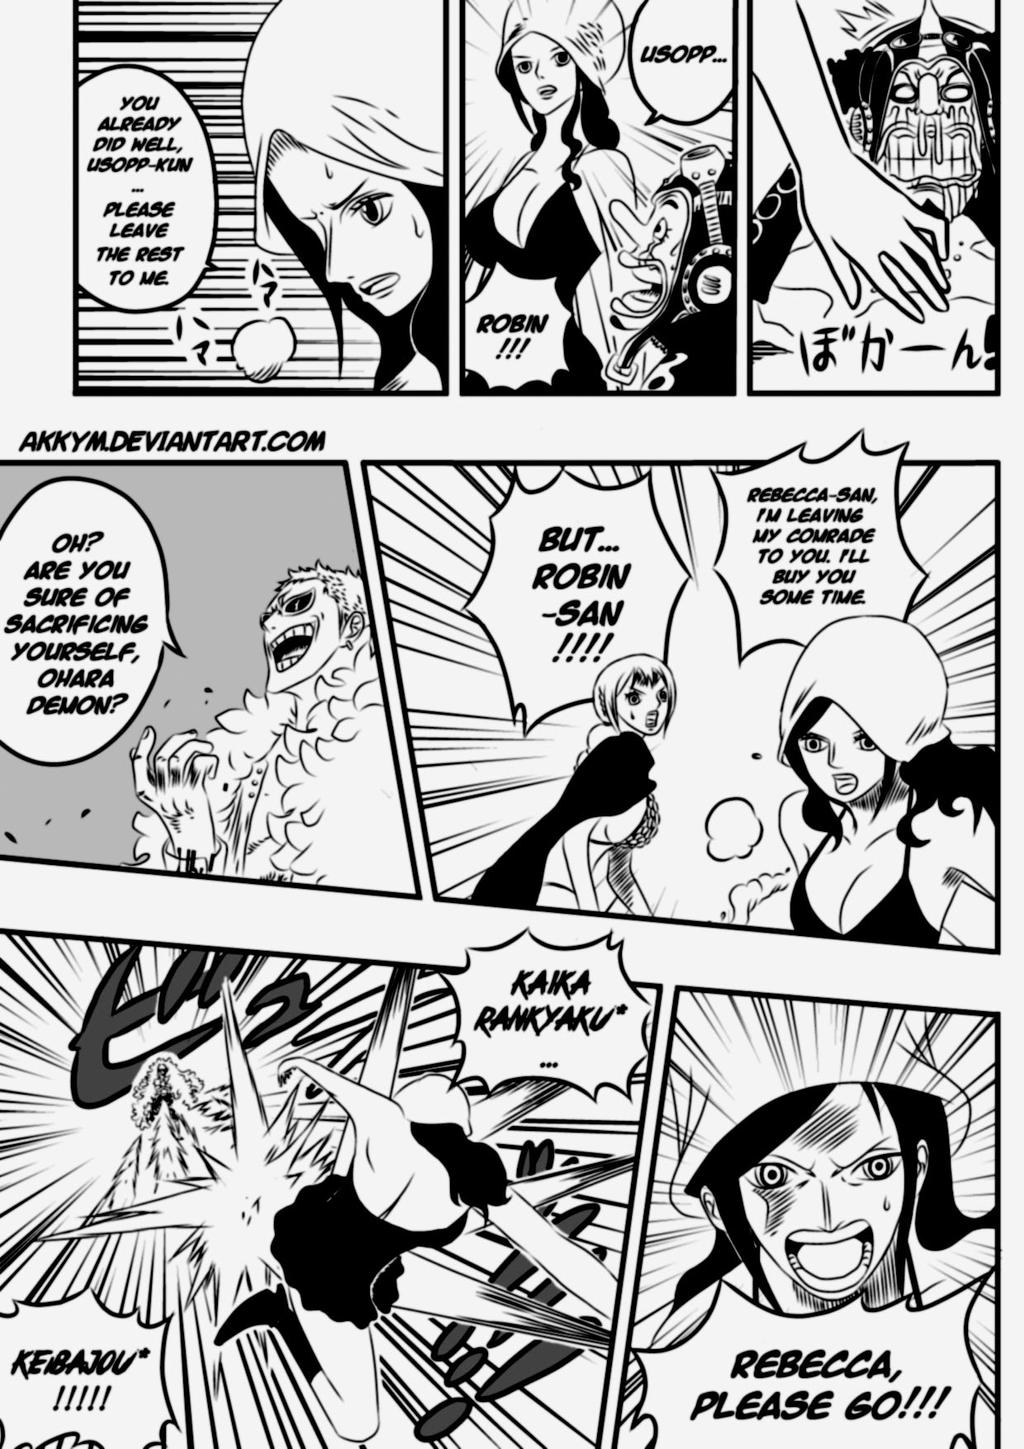 THE ROKUSHIKI DEMON page 6 by AKKYMx on DeviantArt